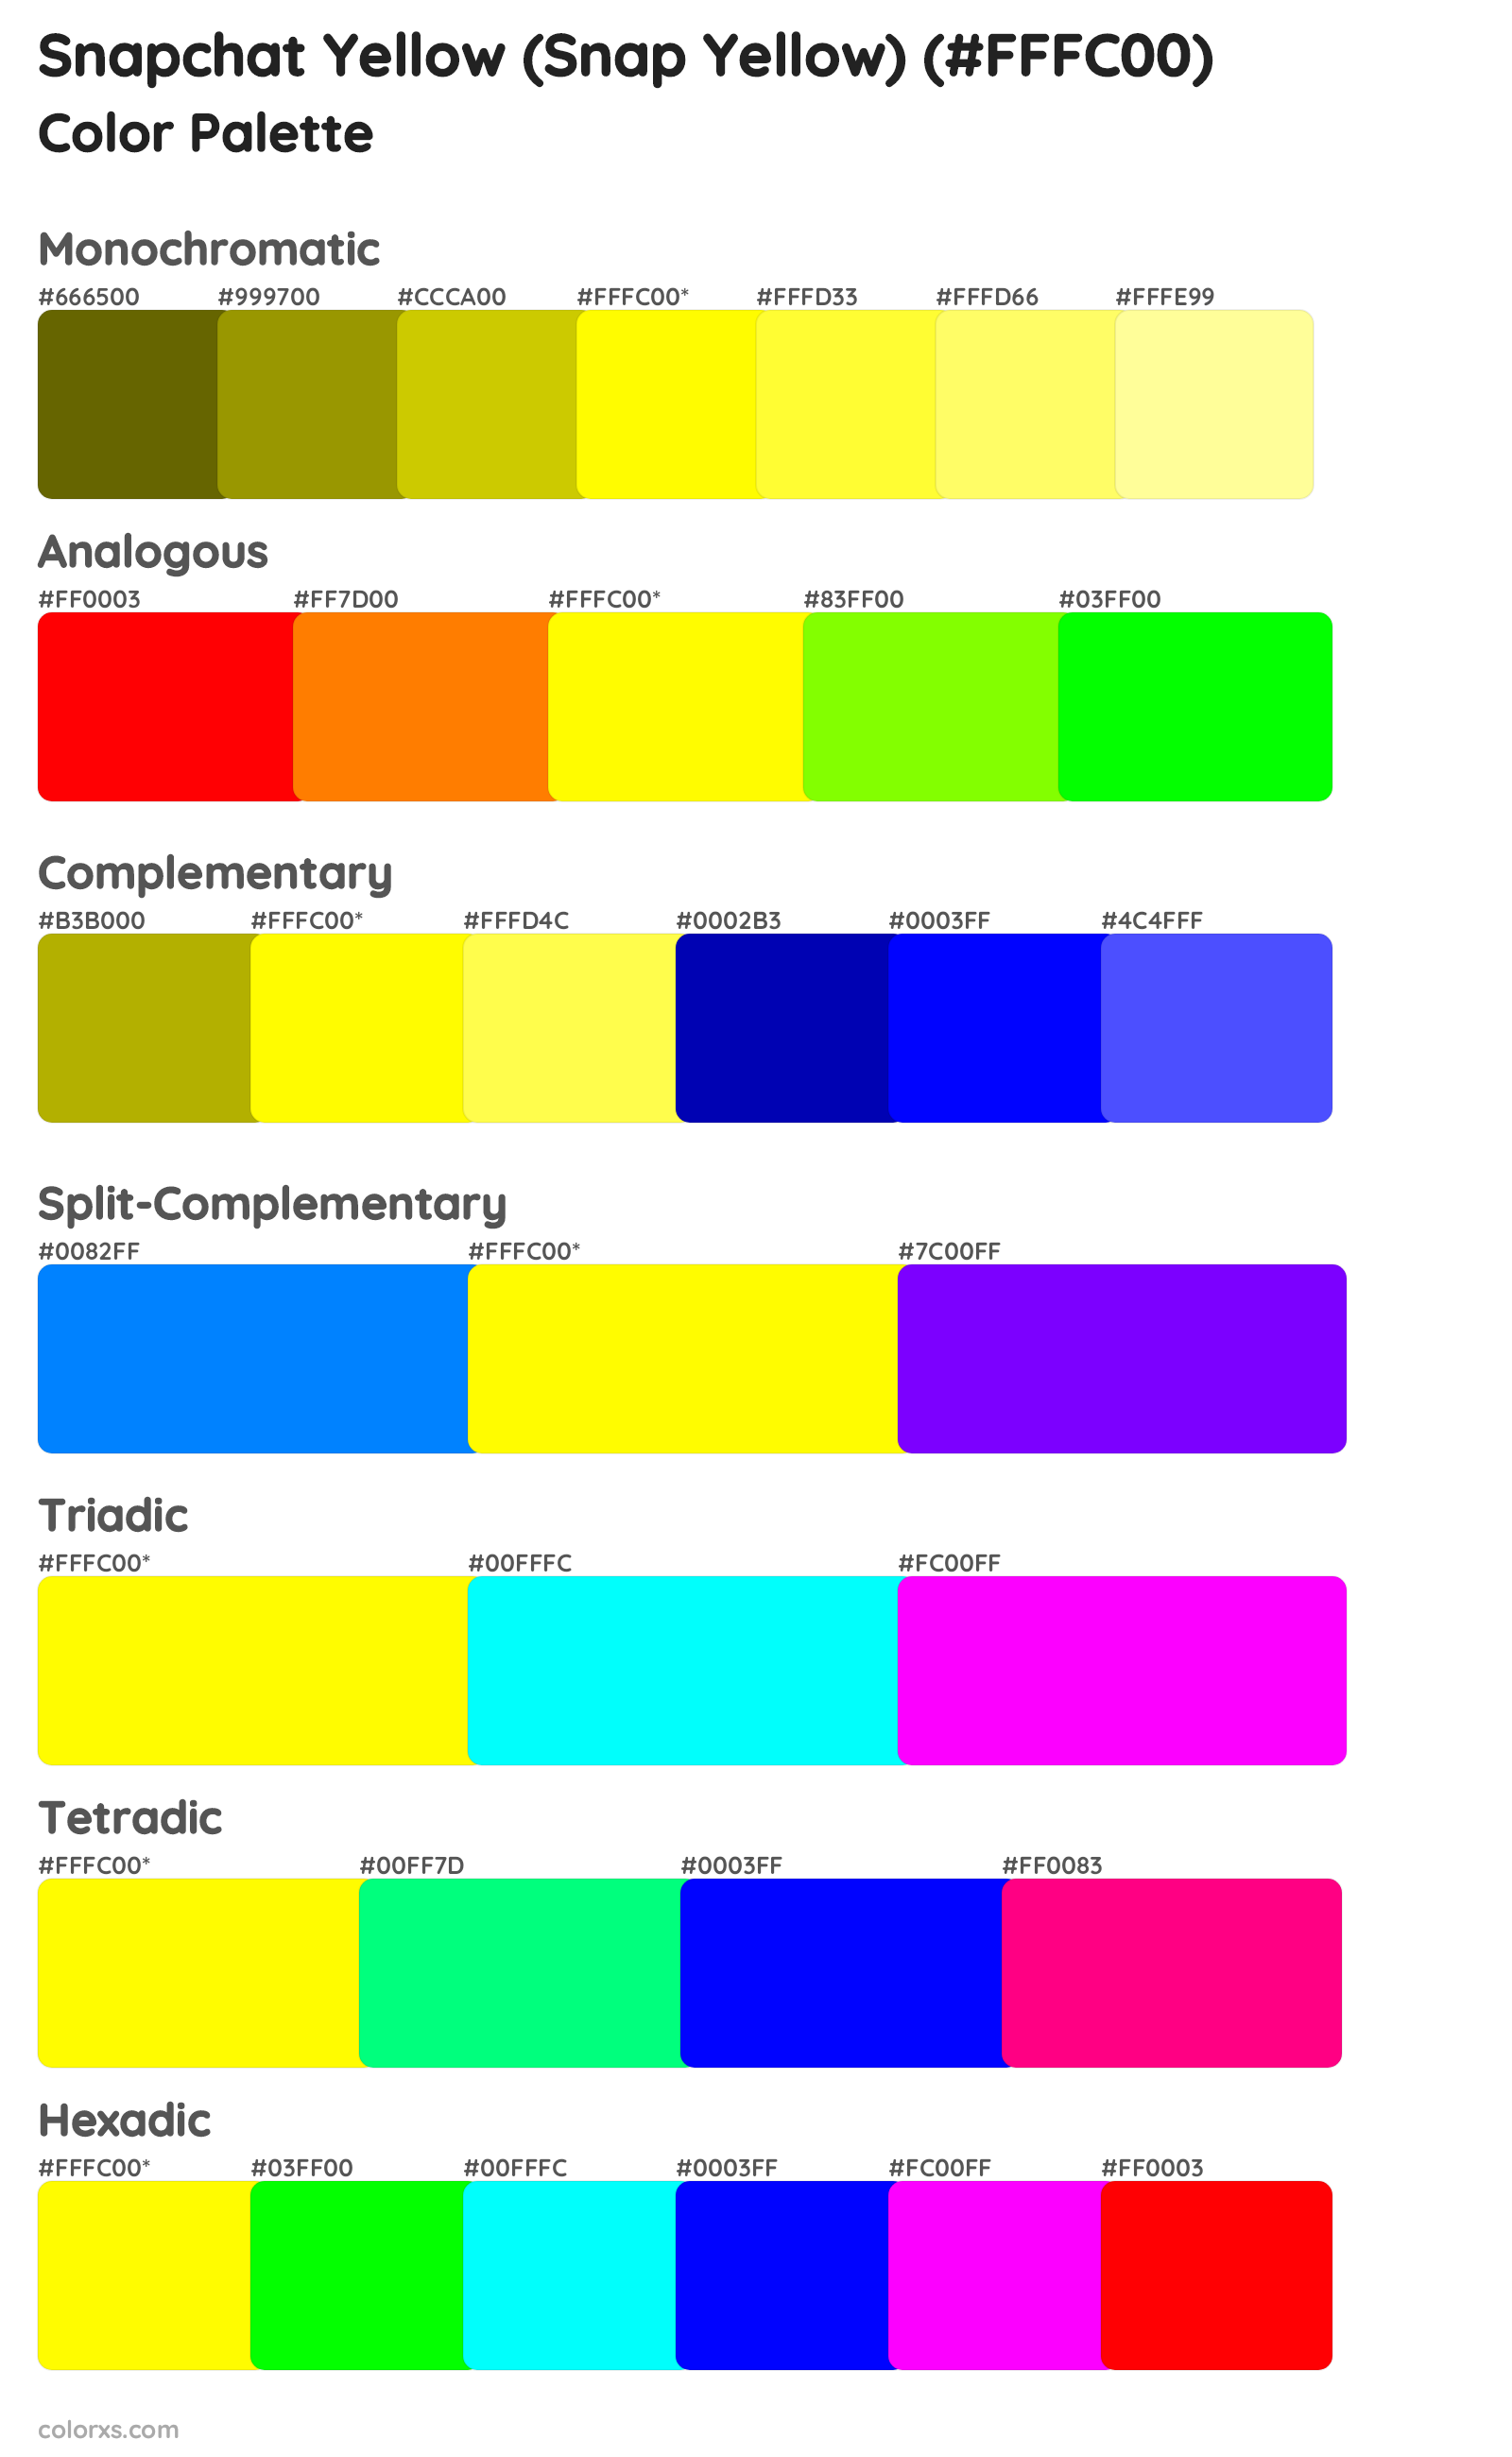 Snapchat Yellow (Snap Yellow) Color Scheme Palettes